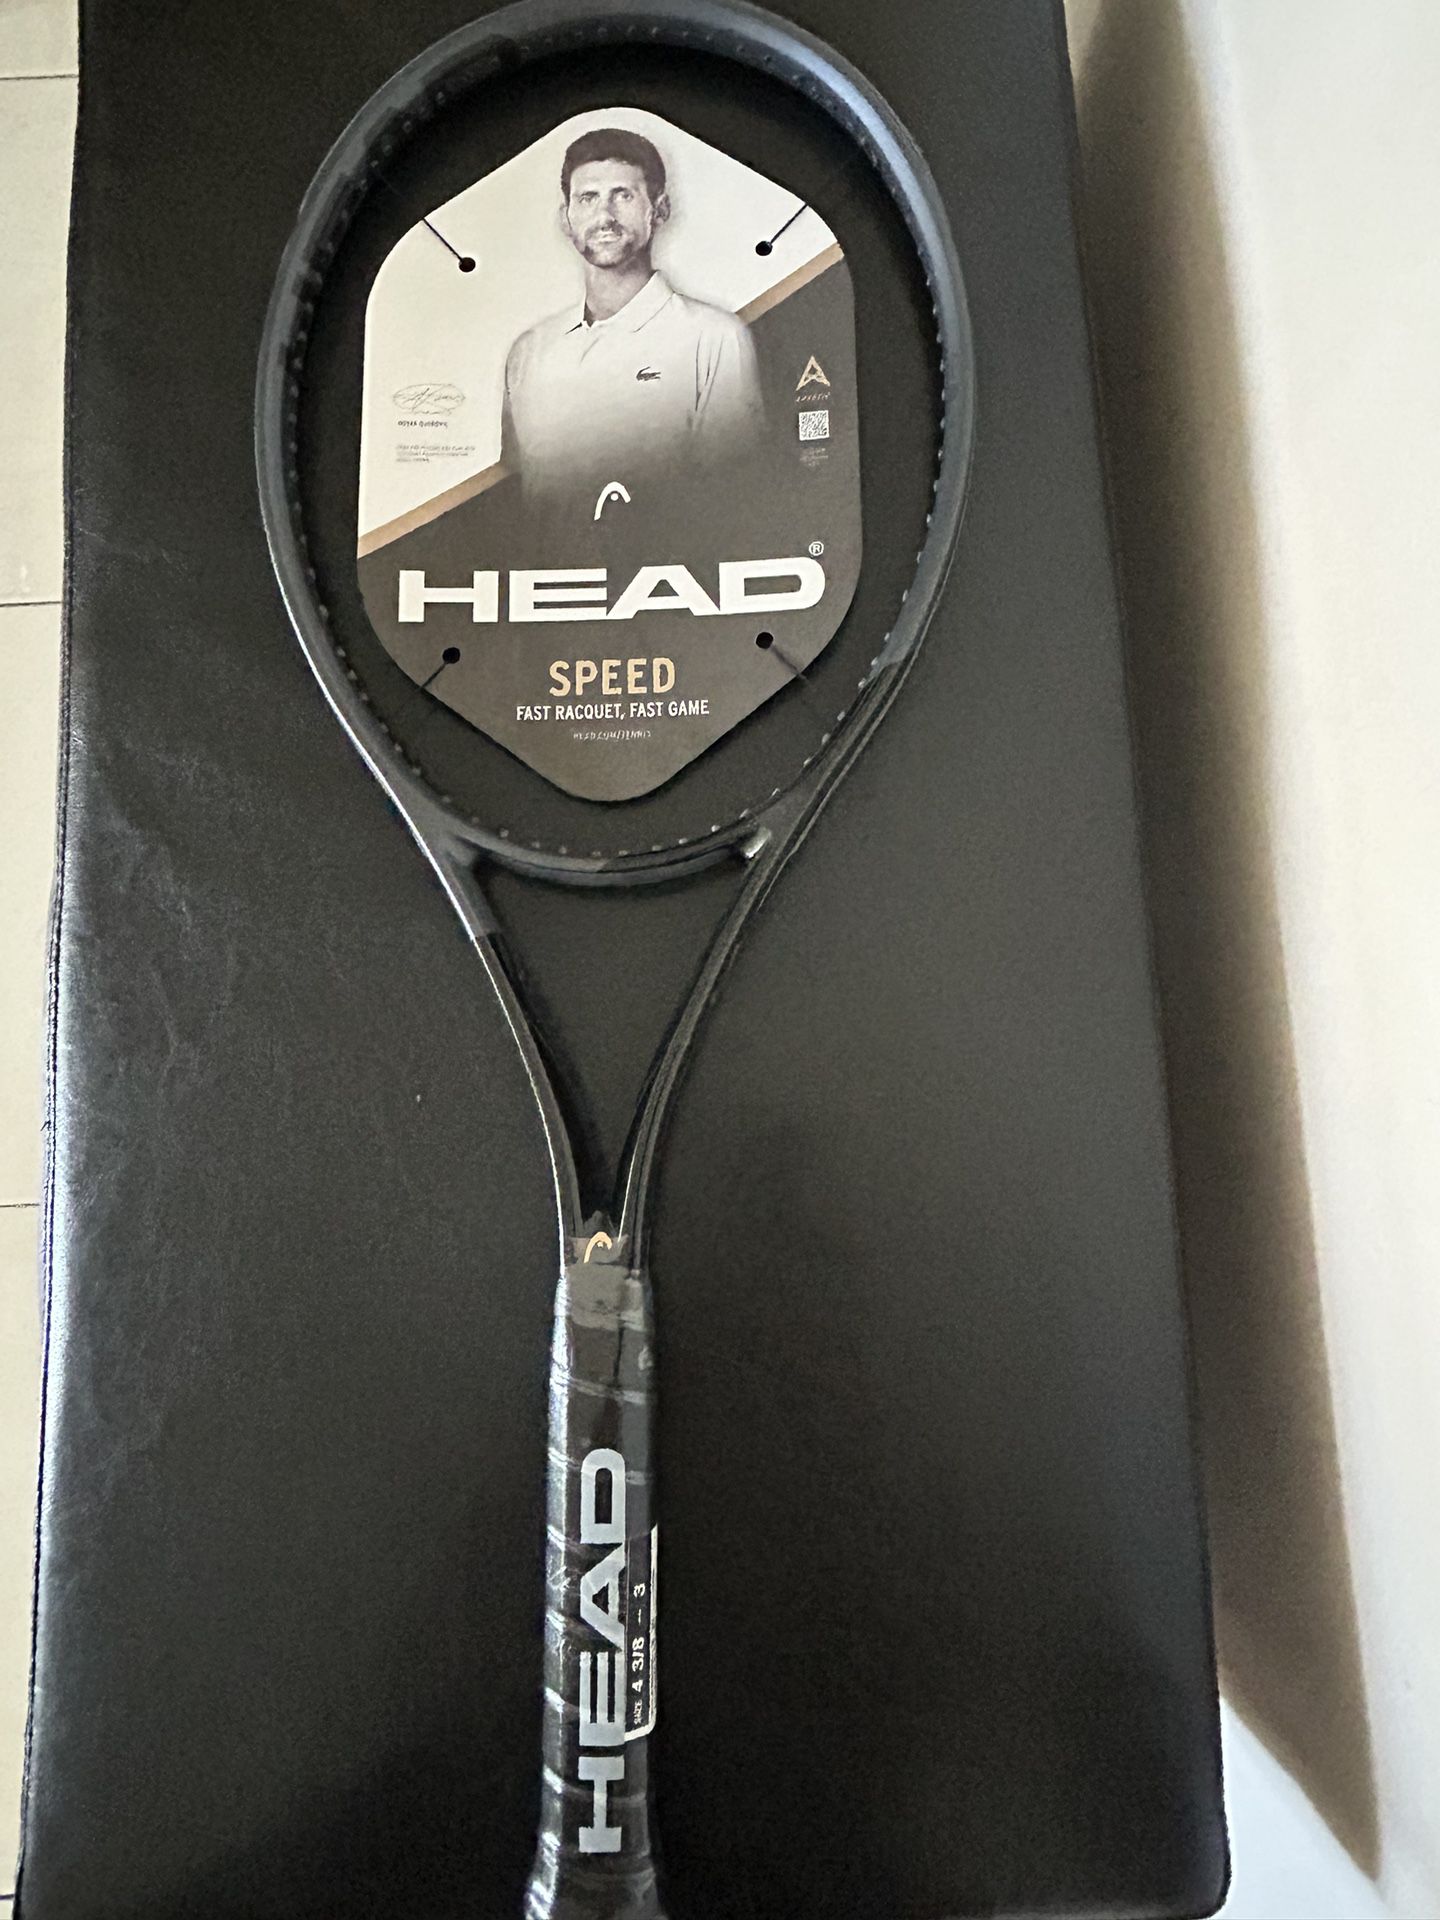 New tennis Racket. Head Speed Pro Black. Grip Size. 3. Length 27 inch.